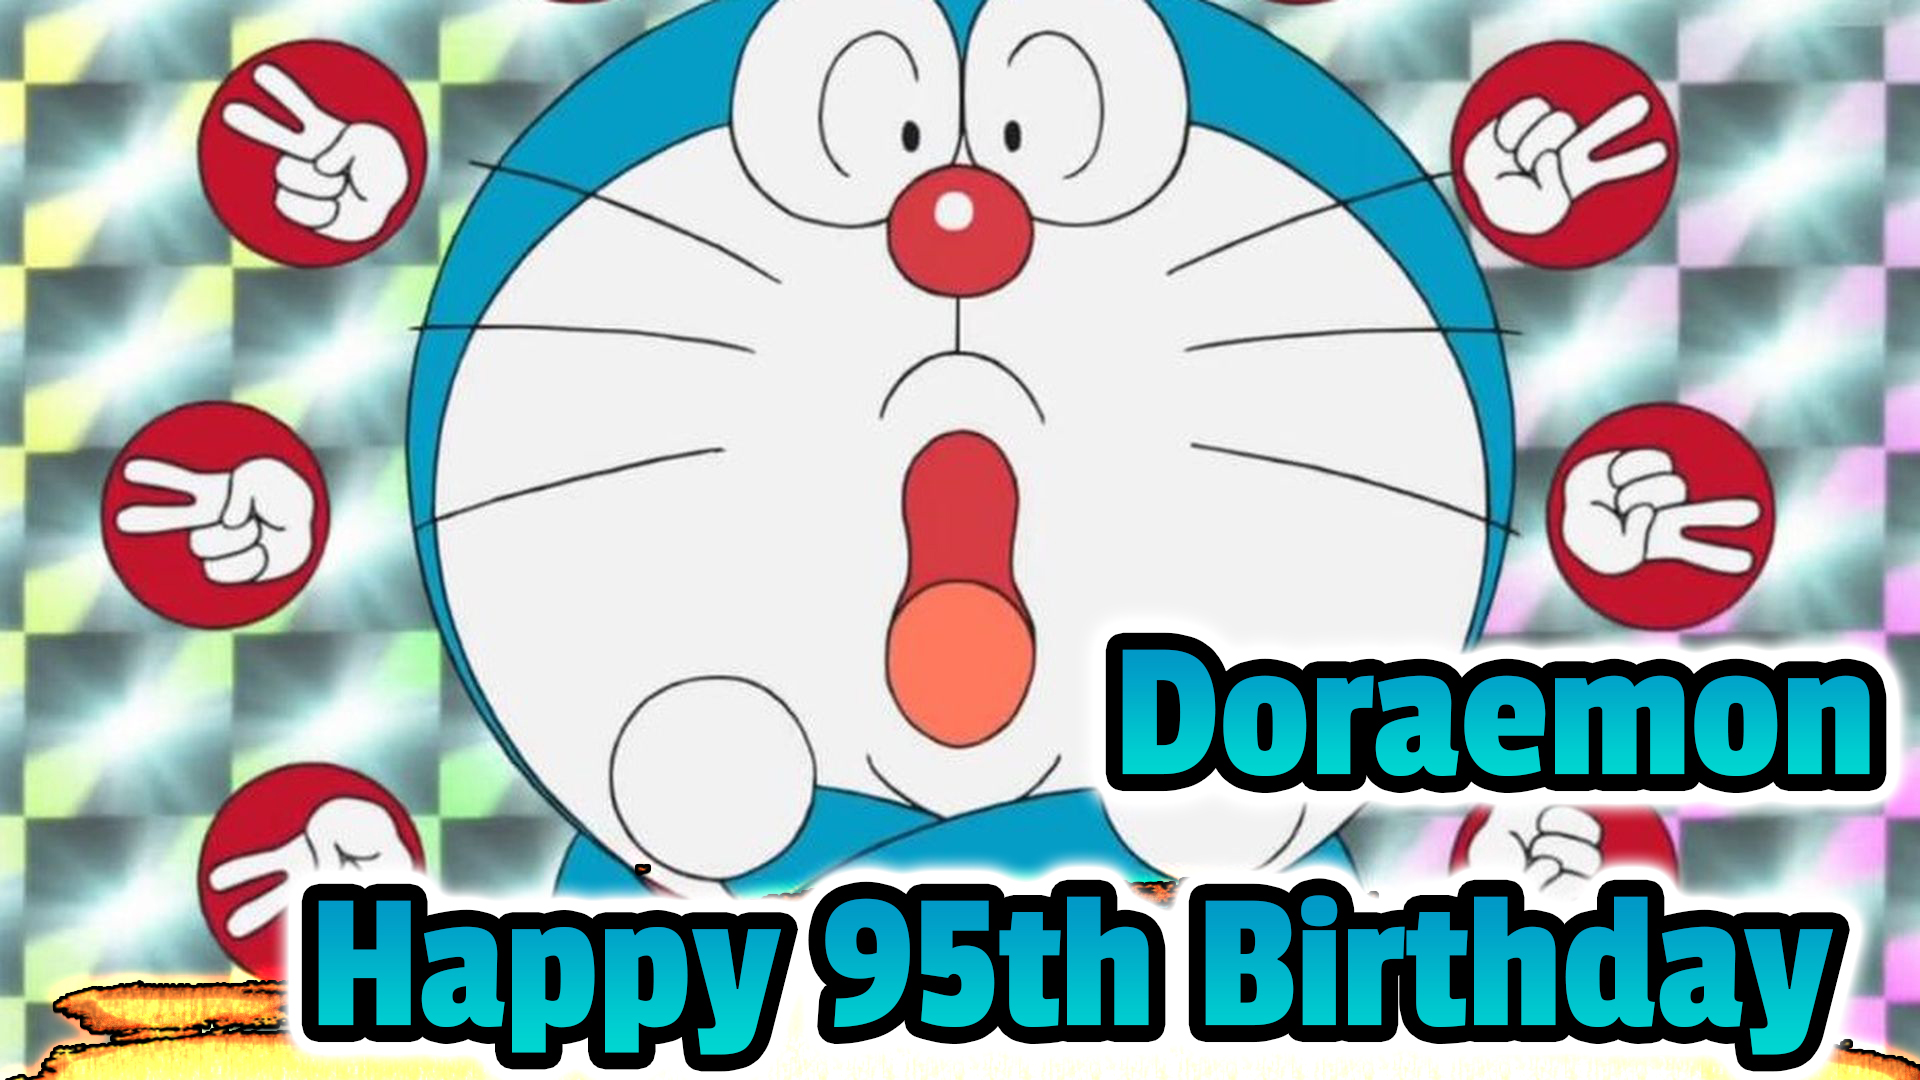 Doraemon| Happy 95th birthday to Doraemon! - Bilibili